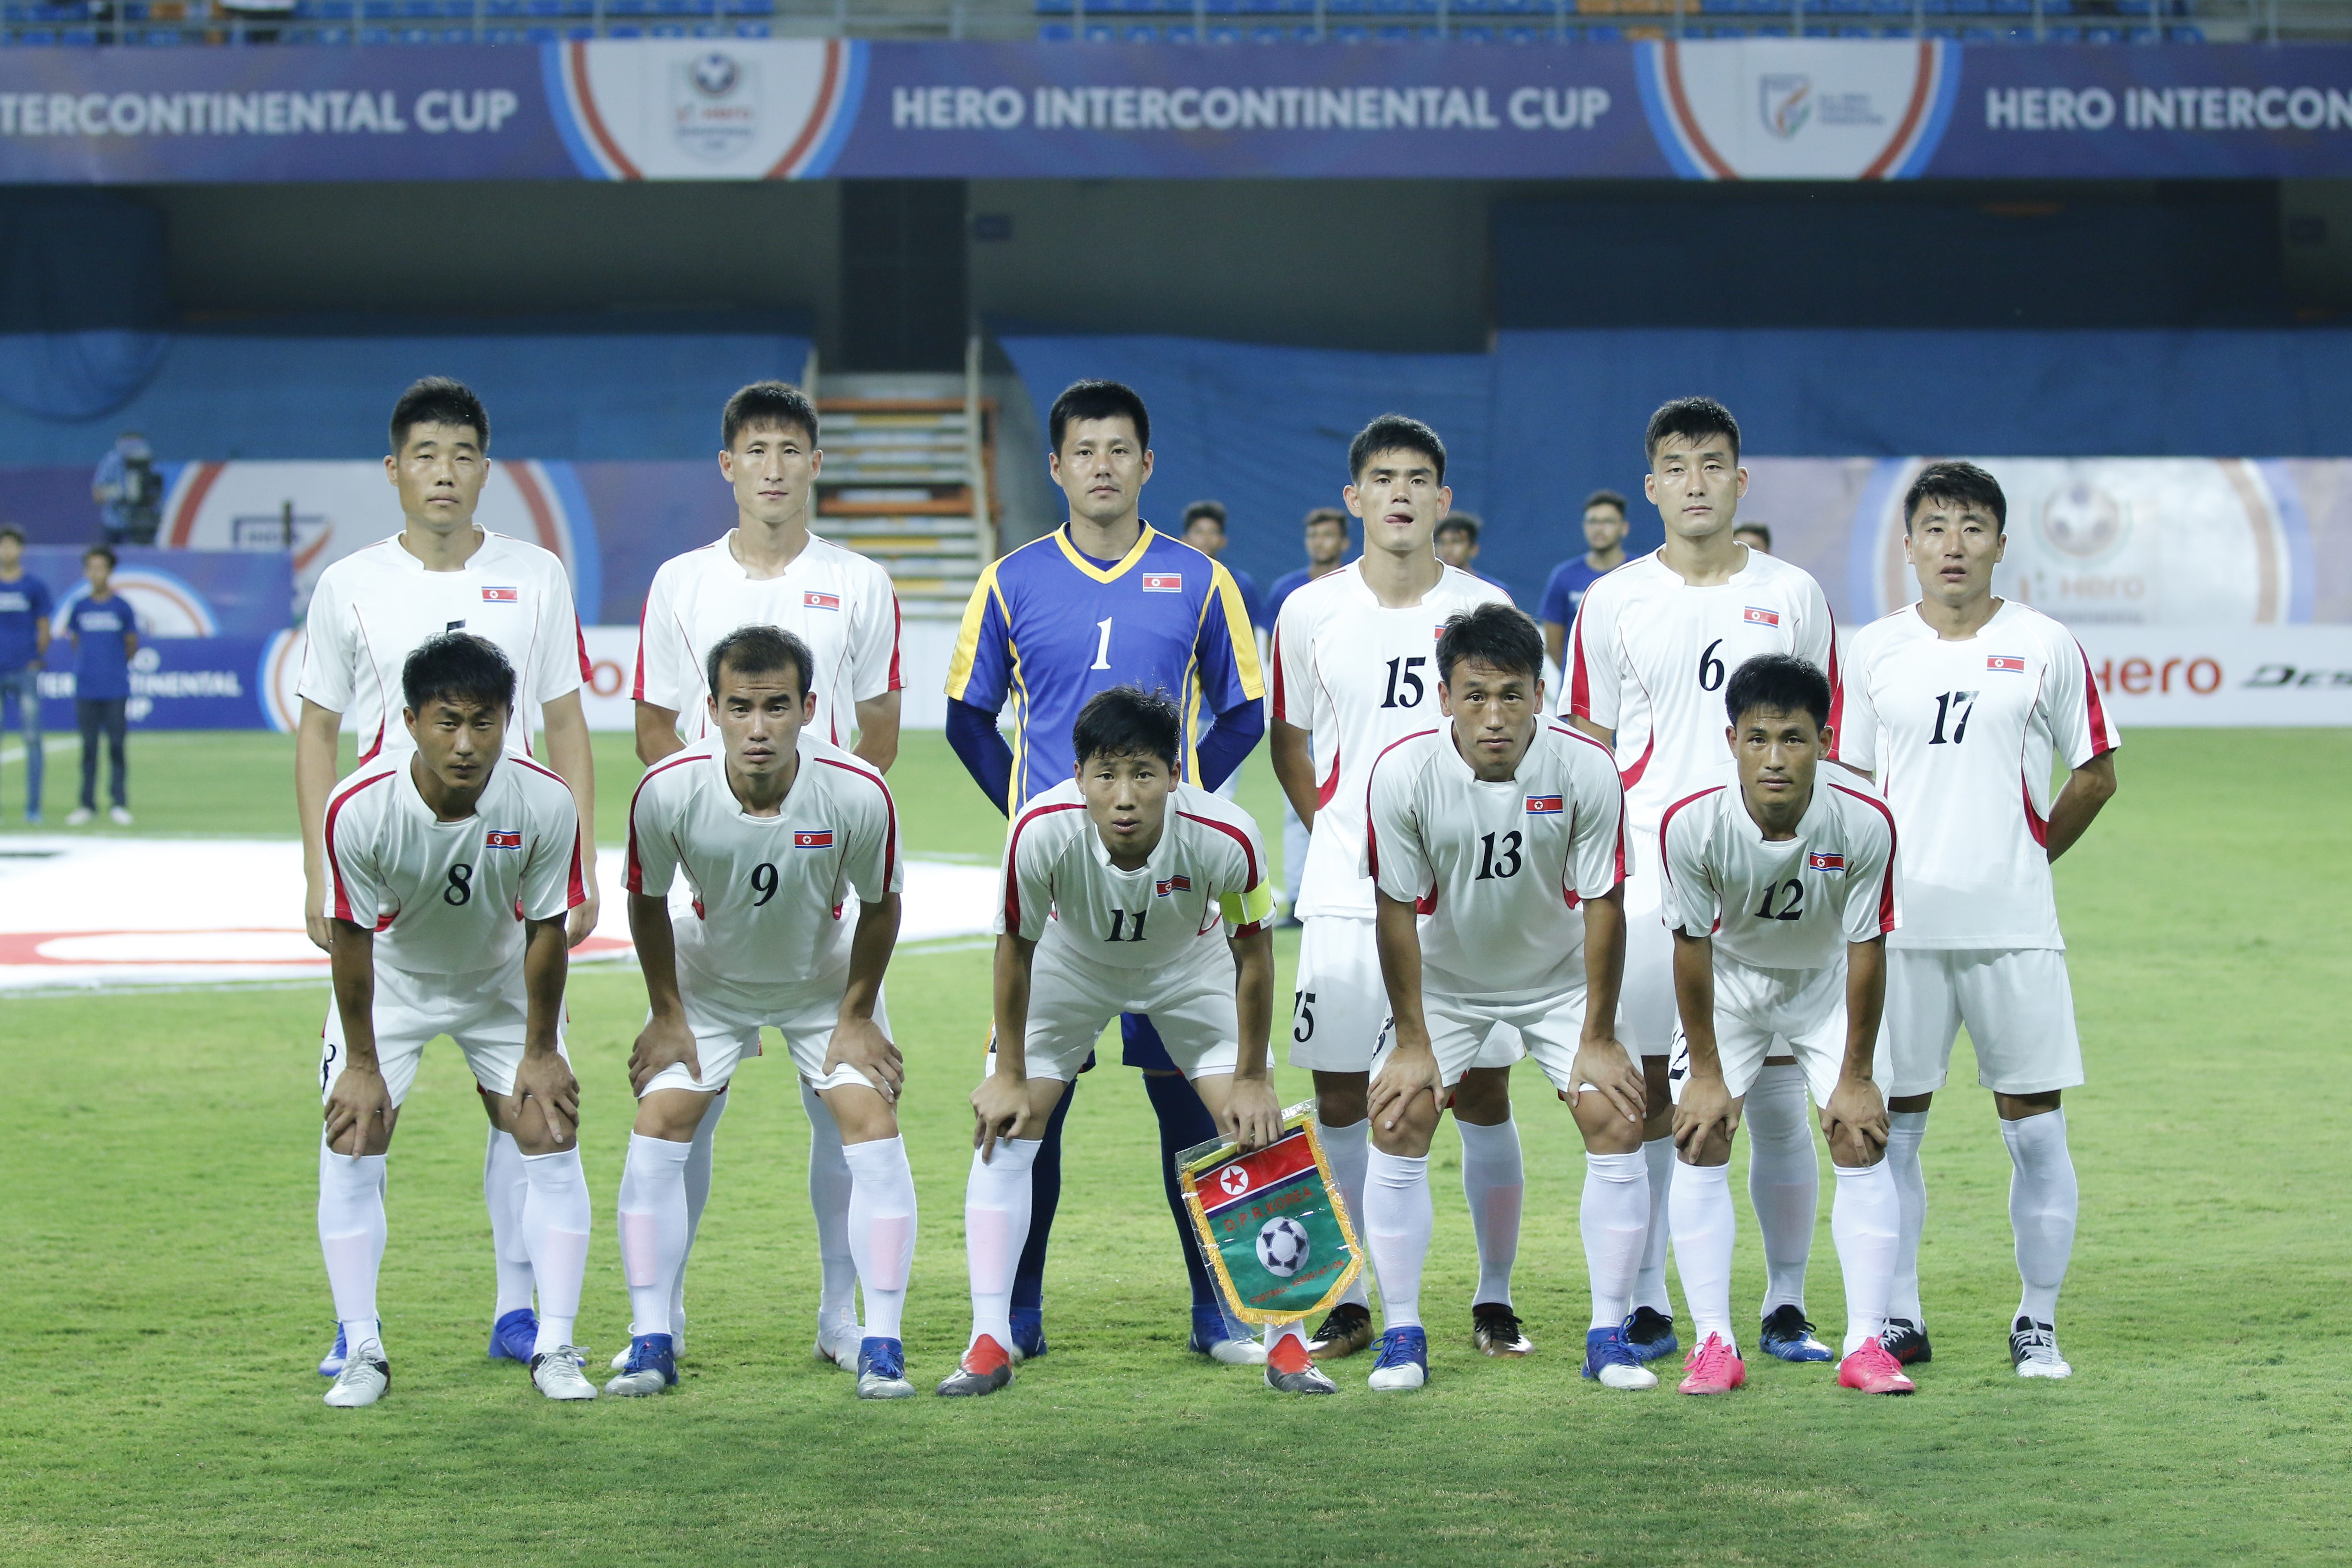 North Korea Football Team InterContinental Cup 2019